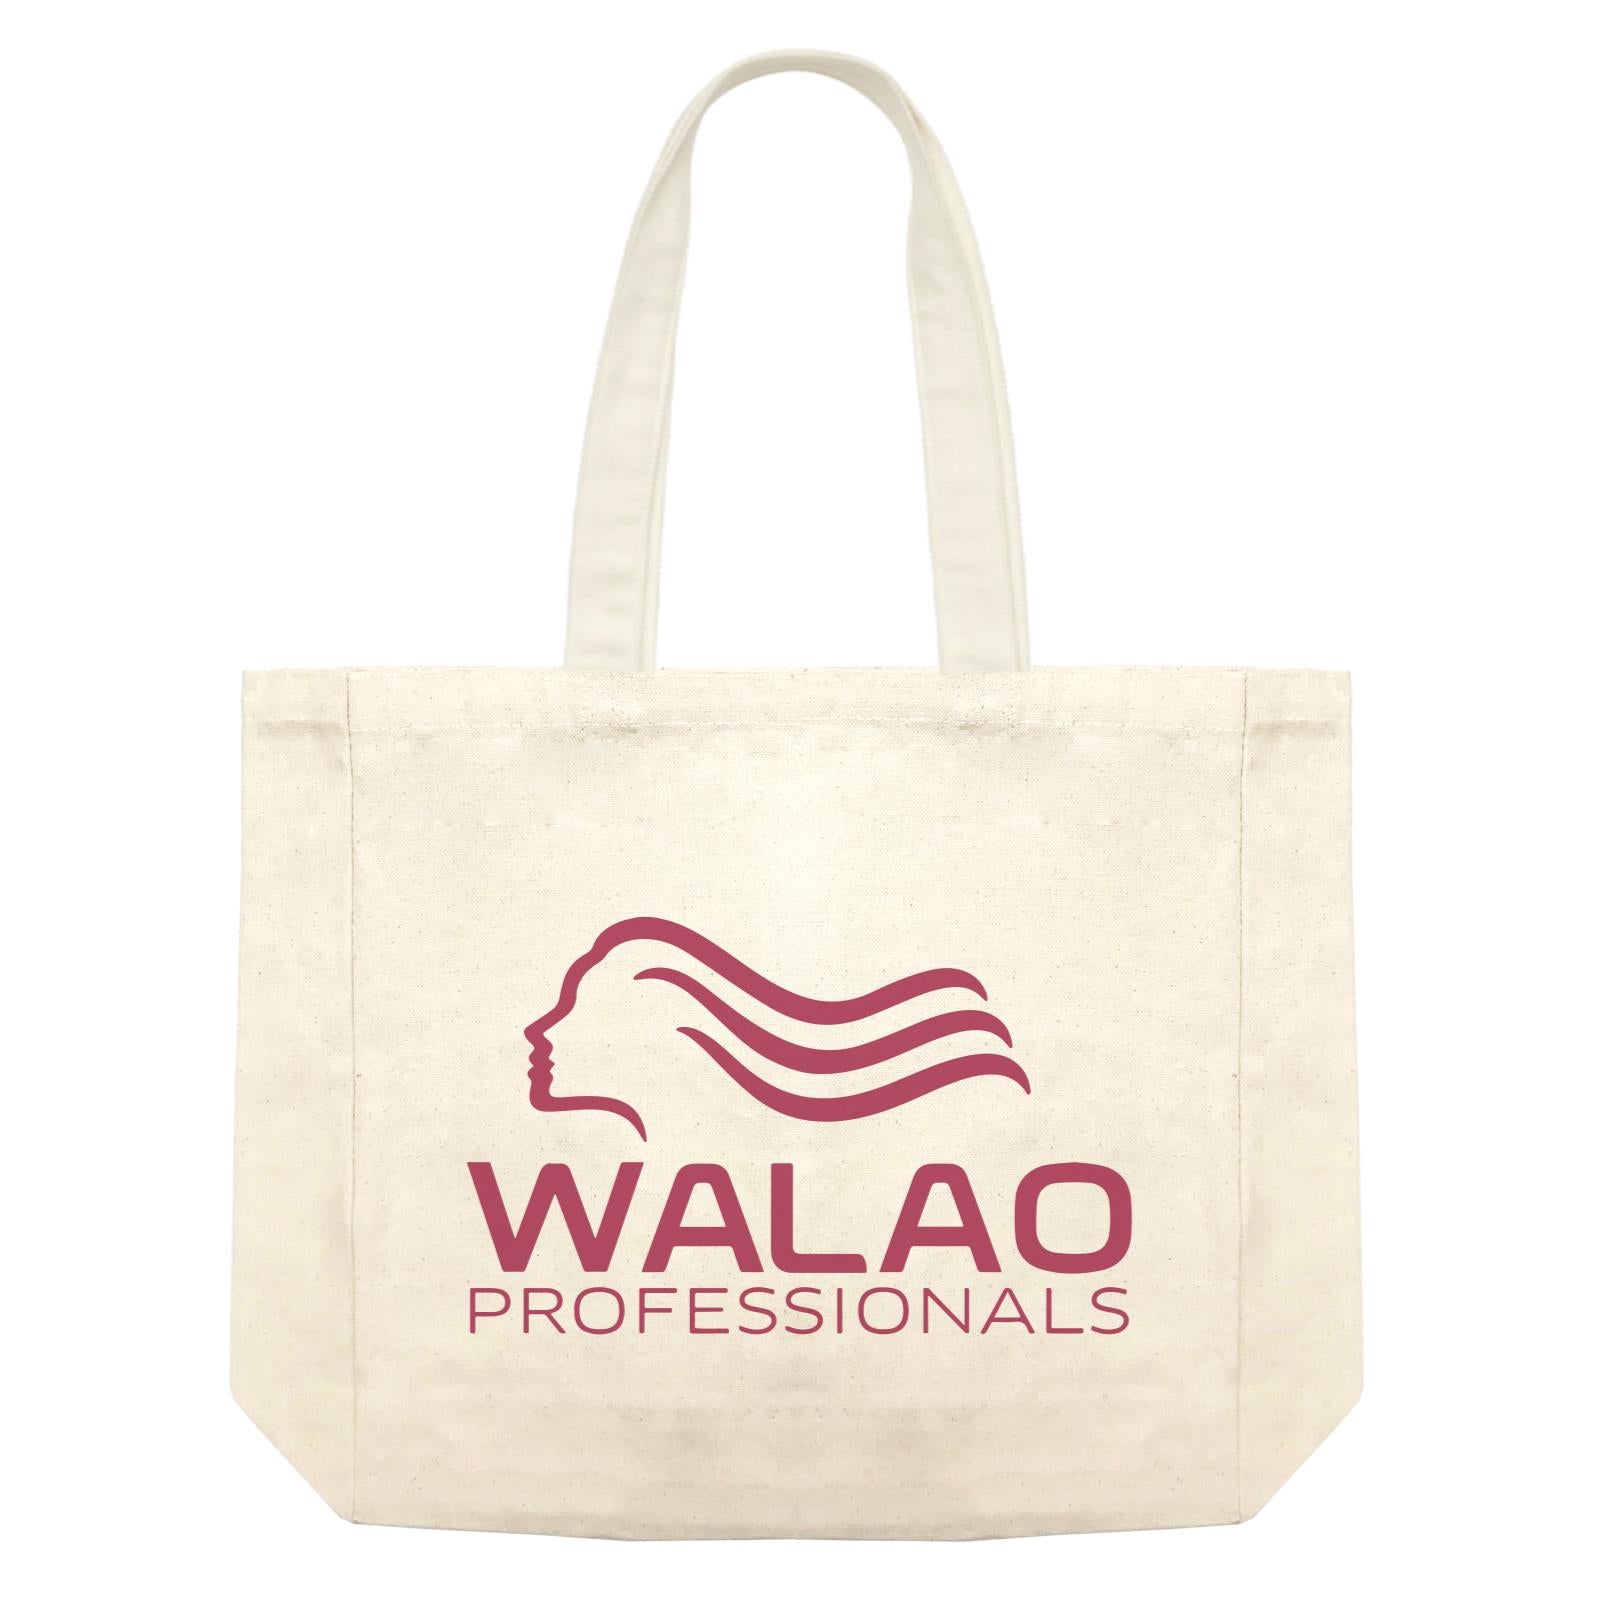 Slang Statement Walao Professional Accessories Shopping Bag